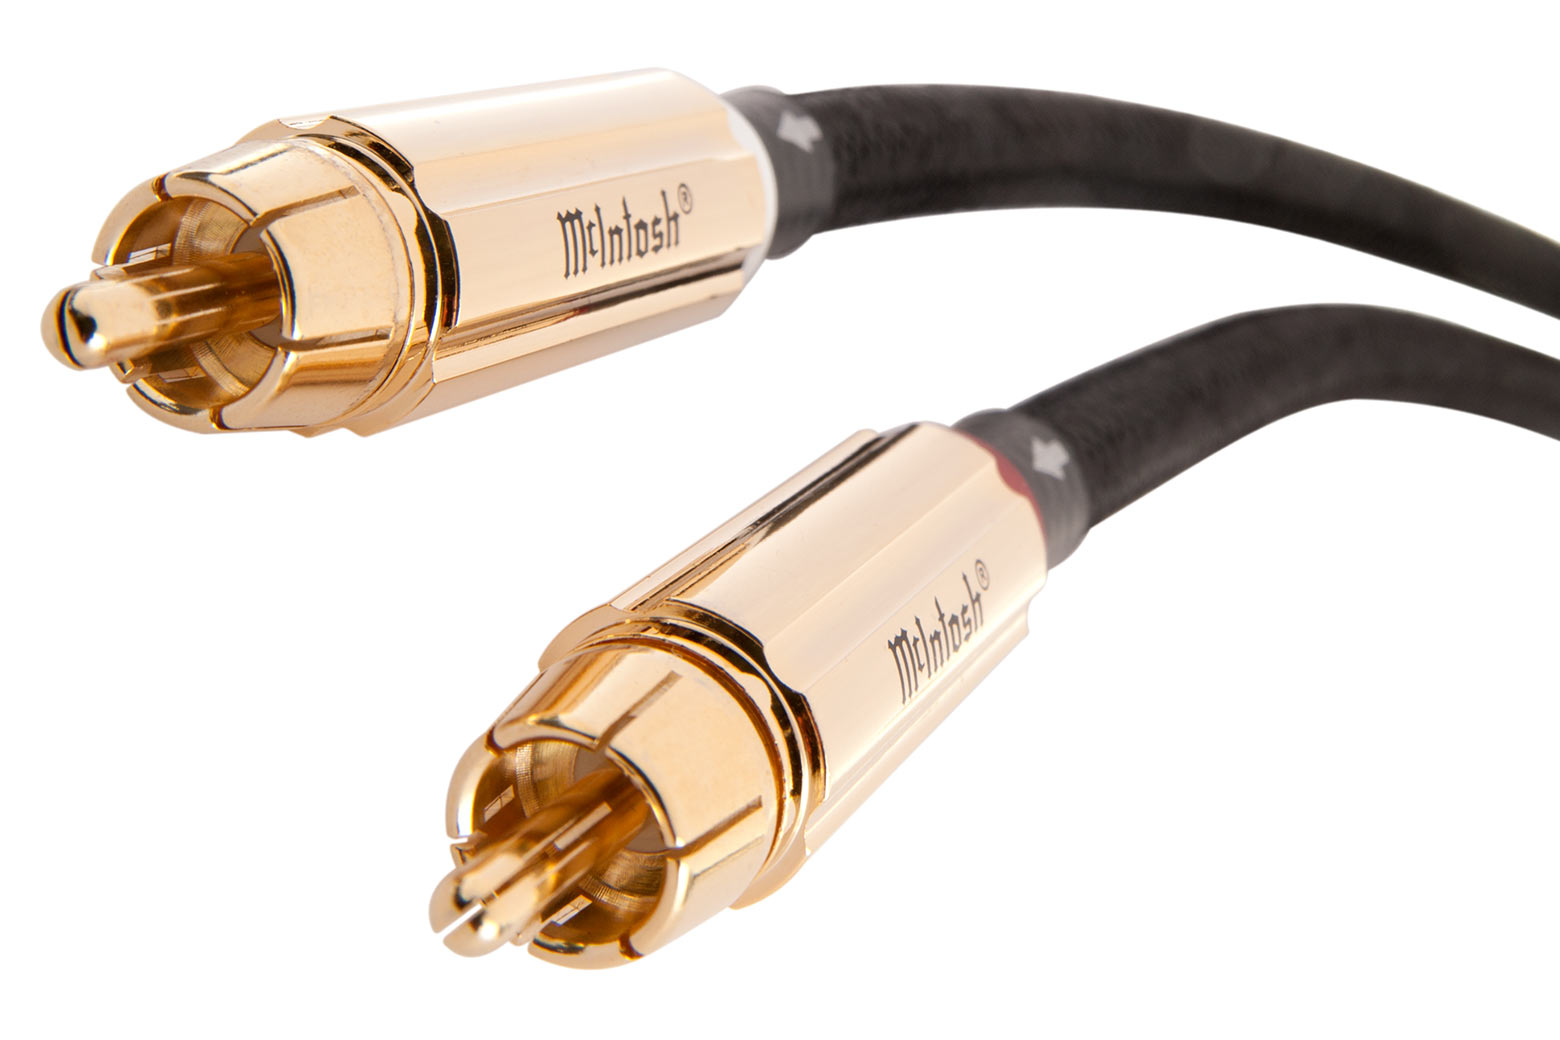 McIntosh Audio Cables